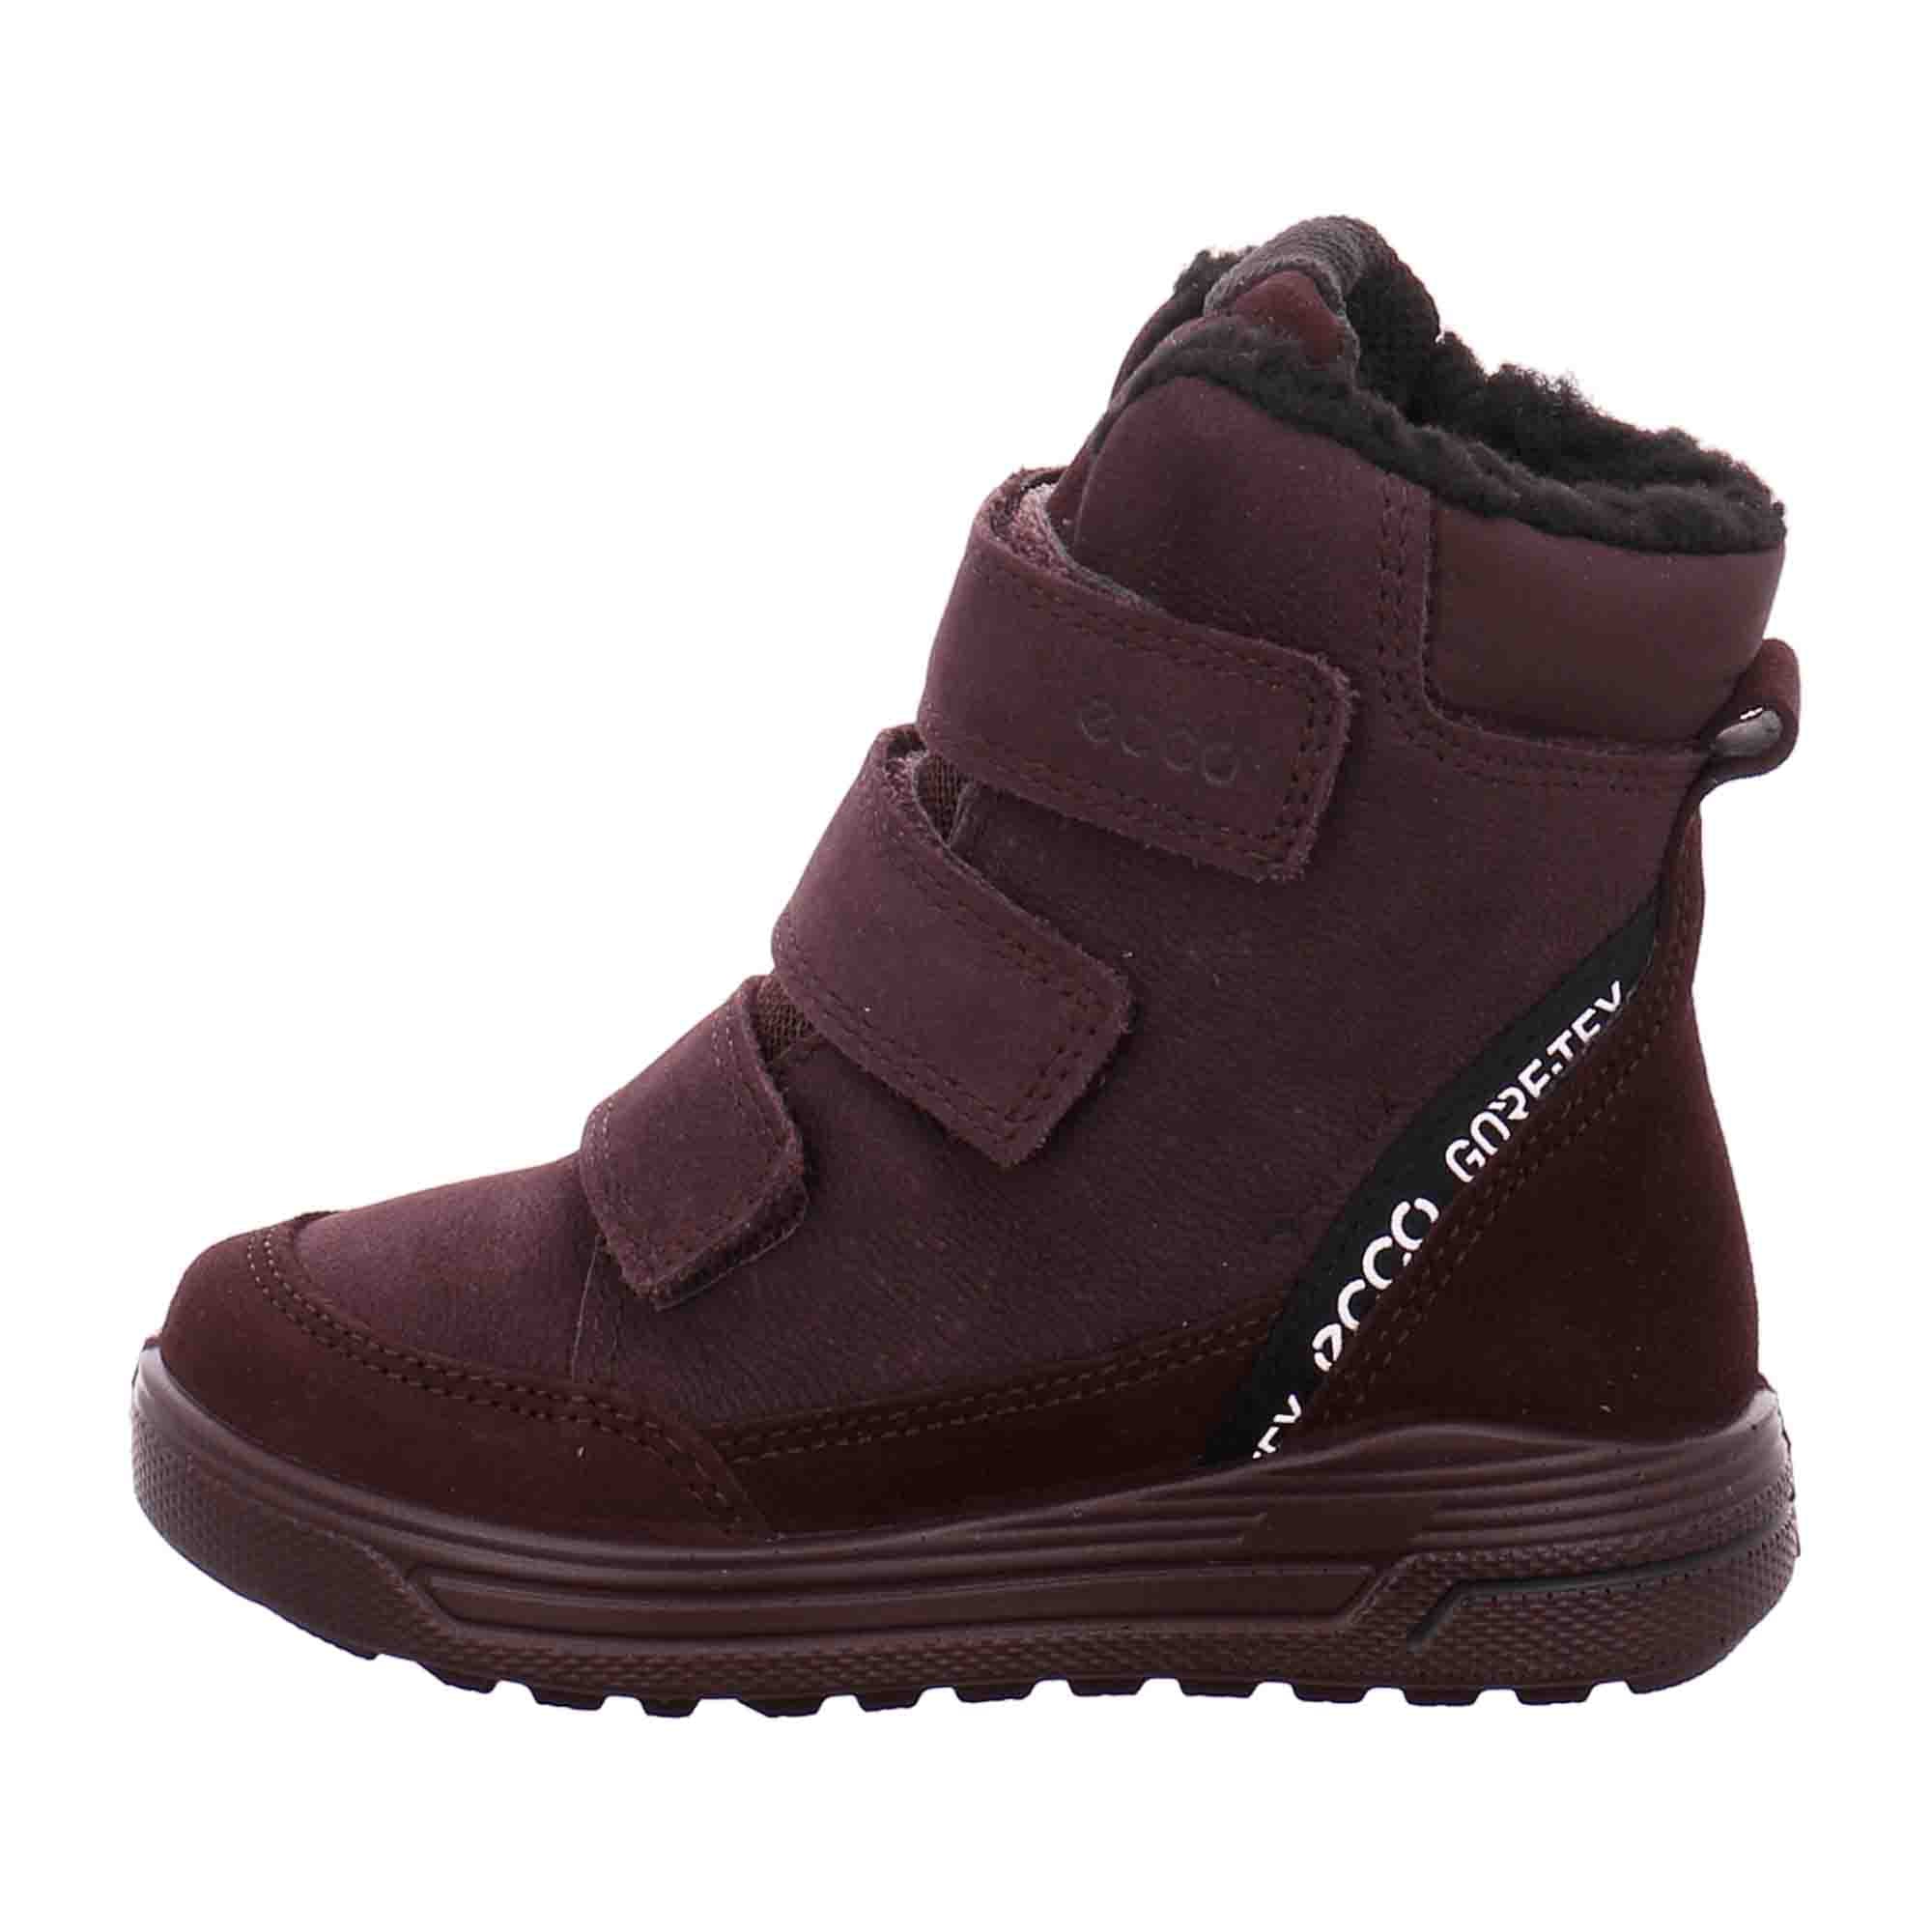 Ecco Kids Purple Sneakers for Children - Durable & Stylish